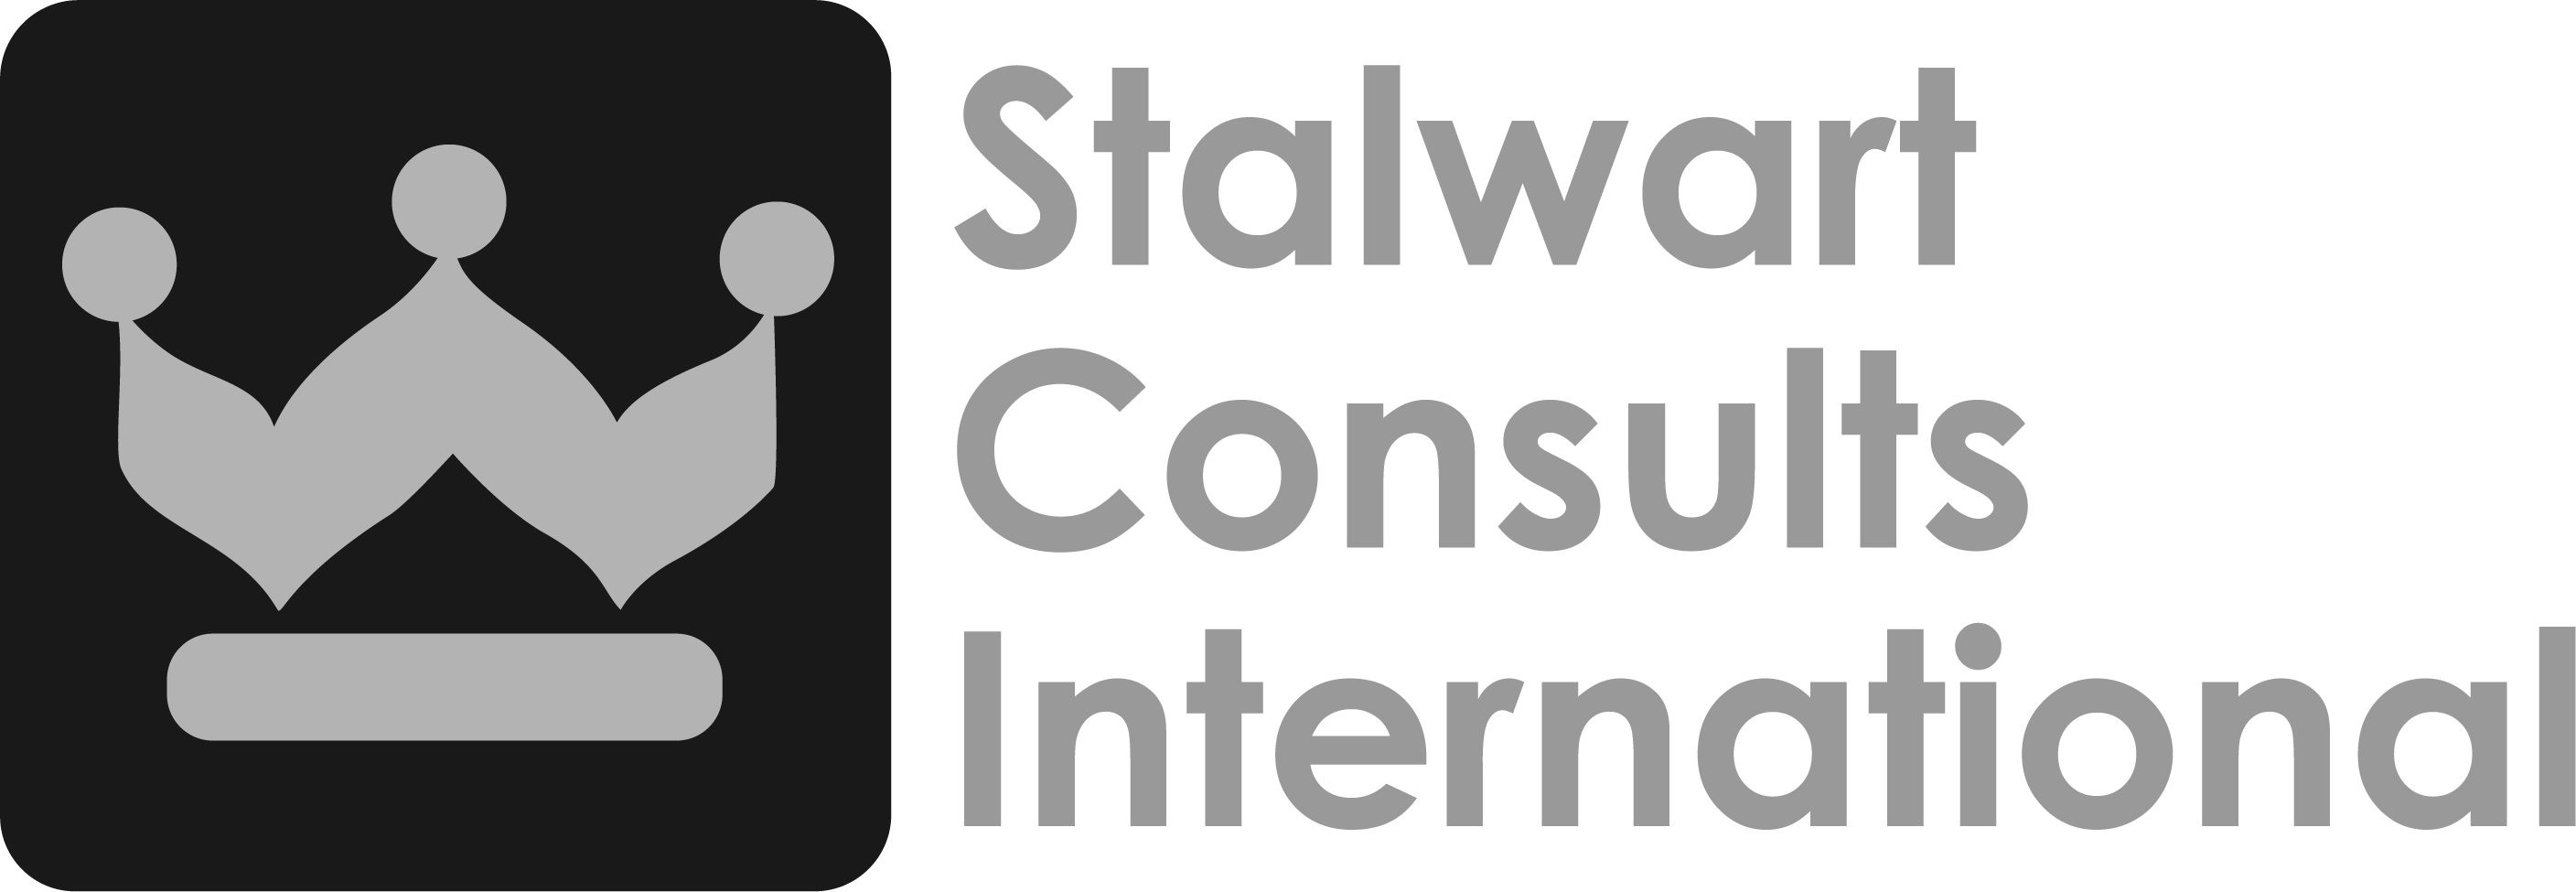 Stalwart Consults International logo